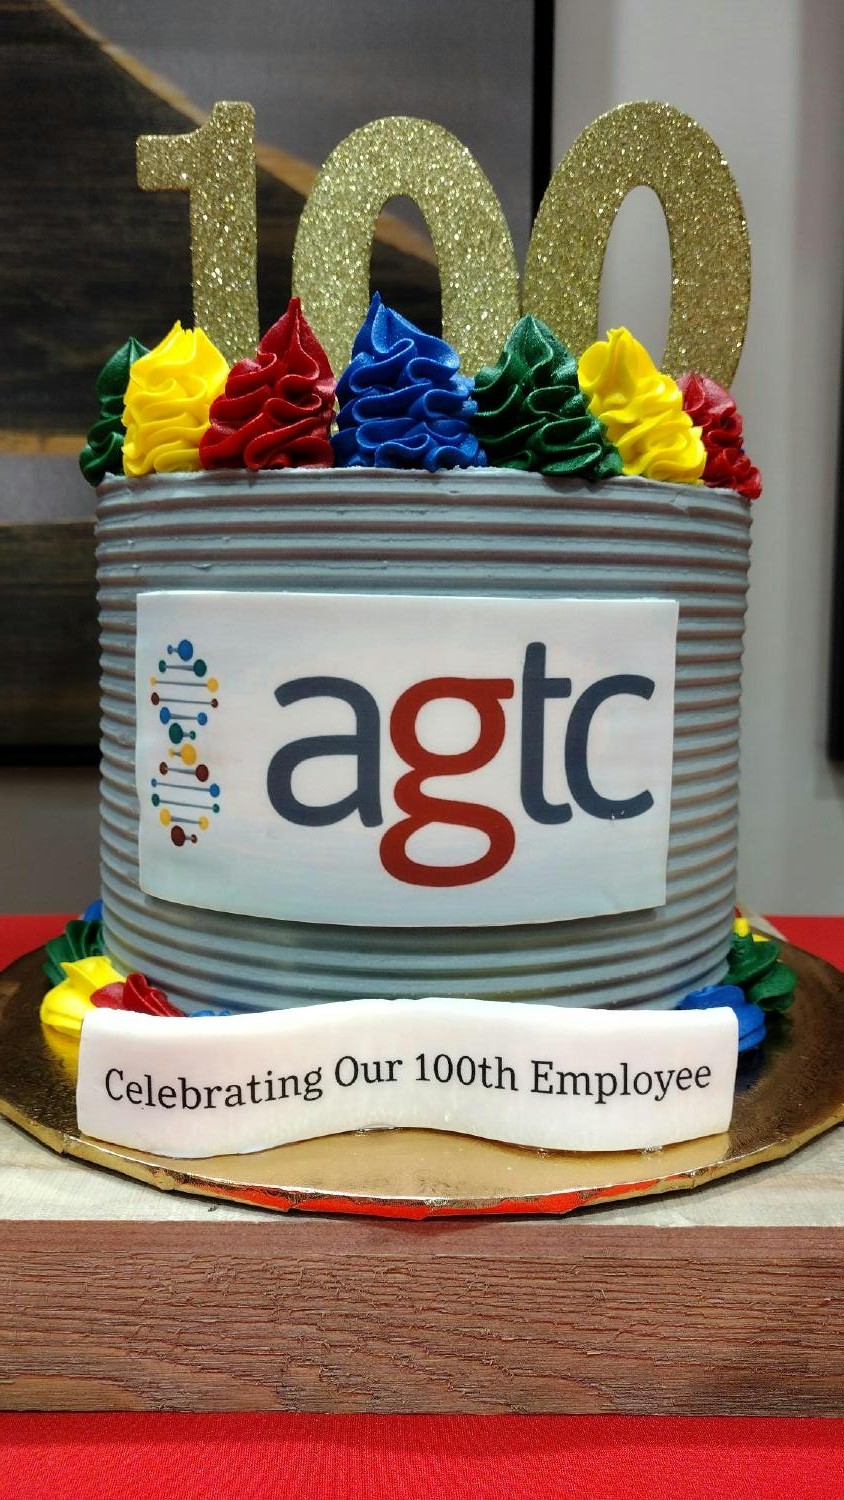 AGTC celebrates 100th employee